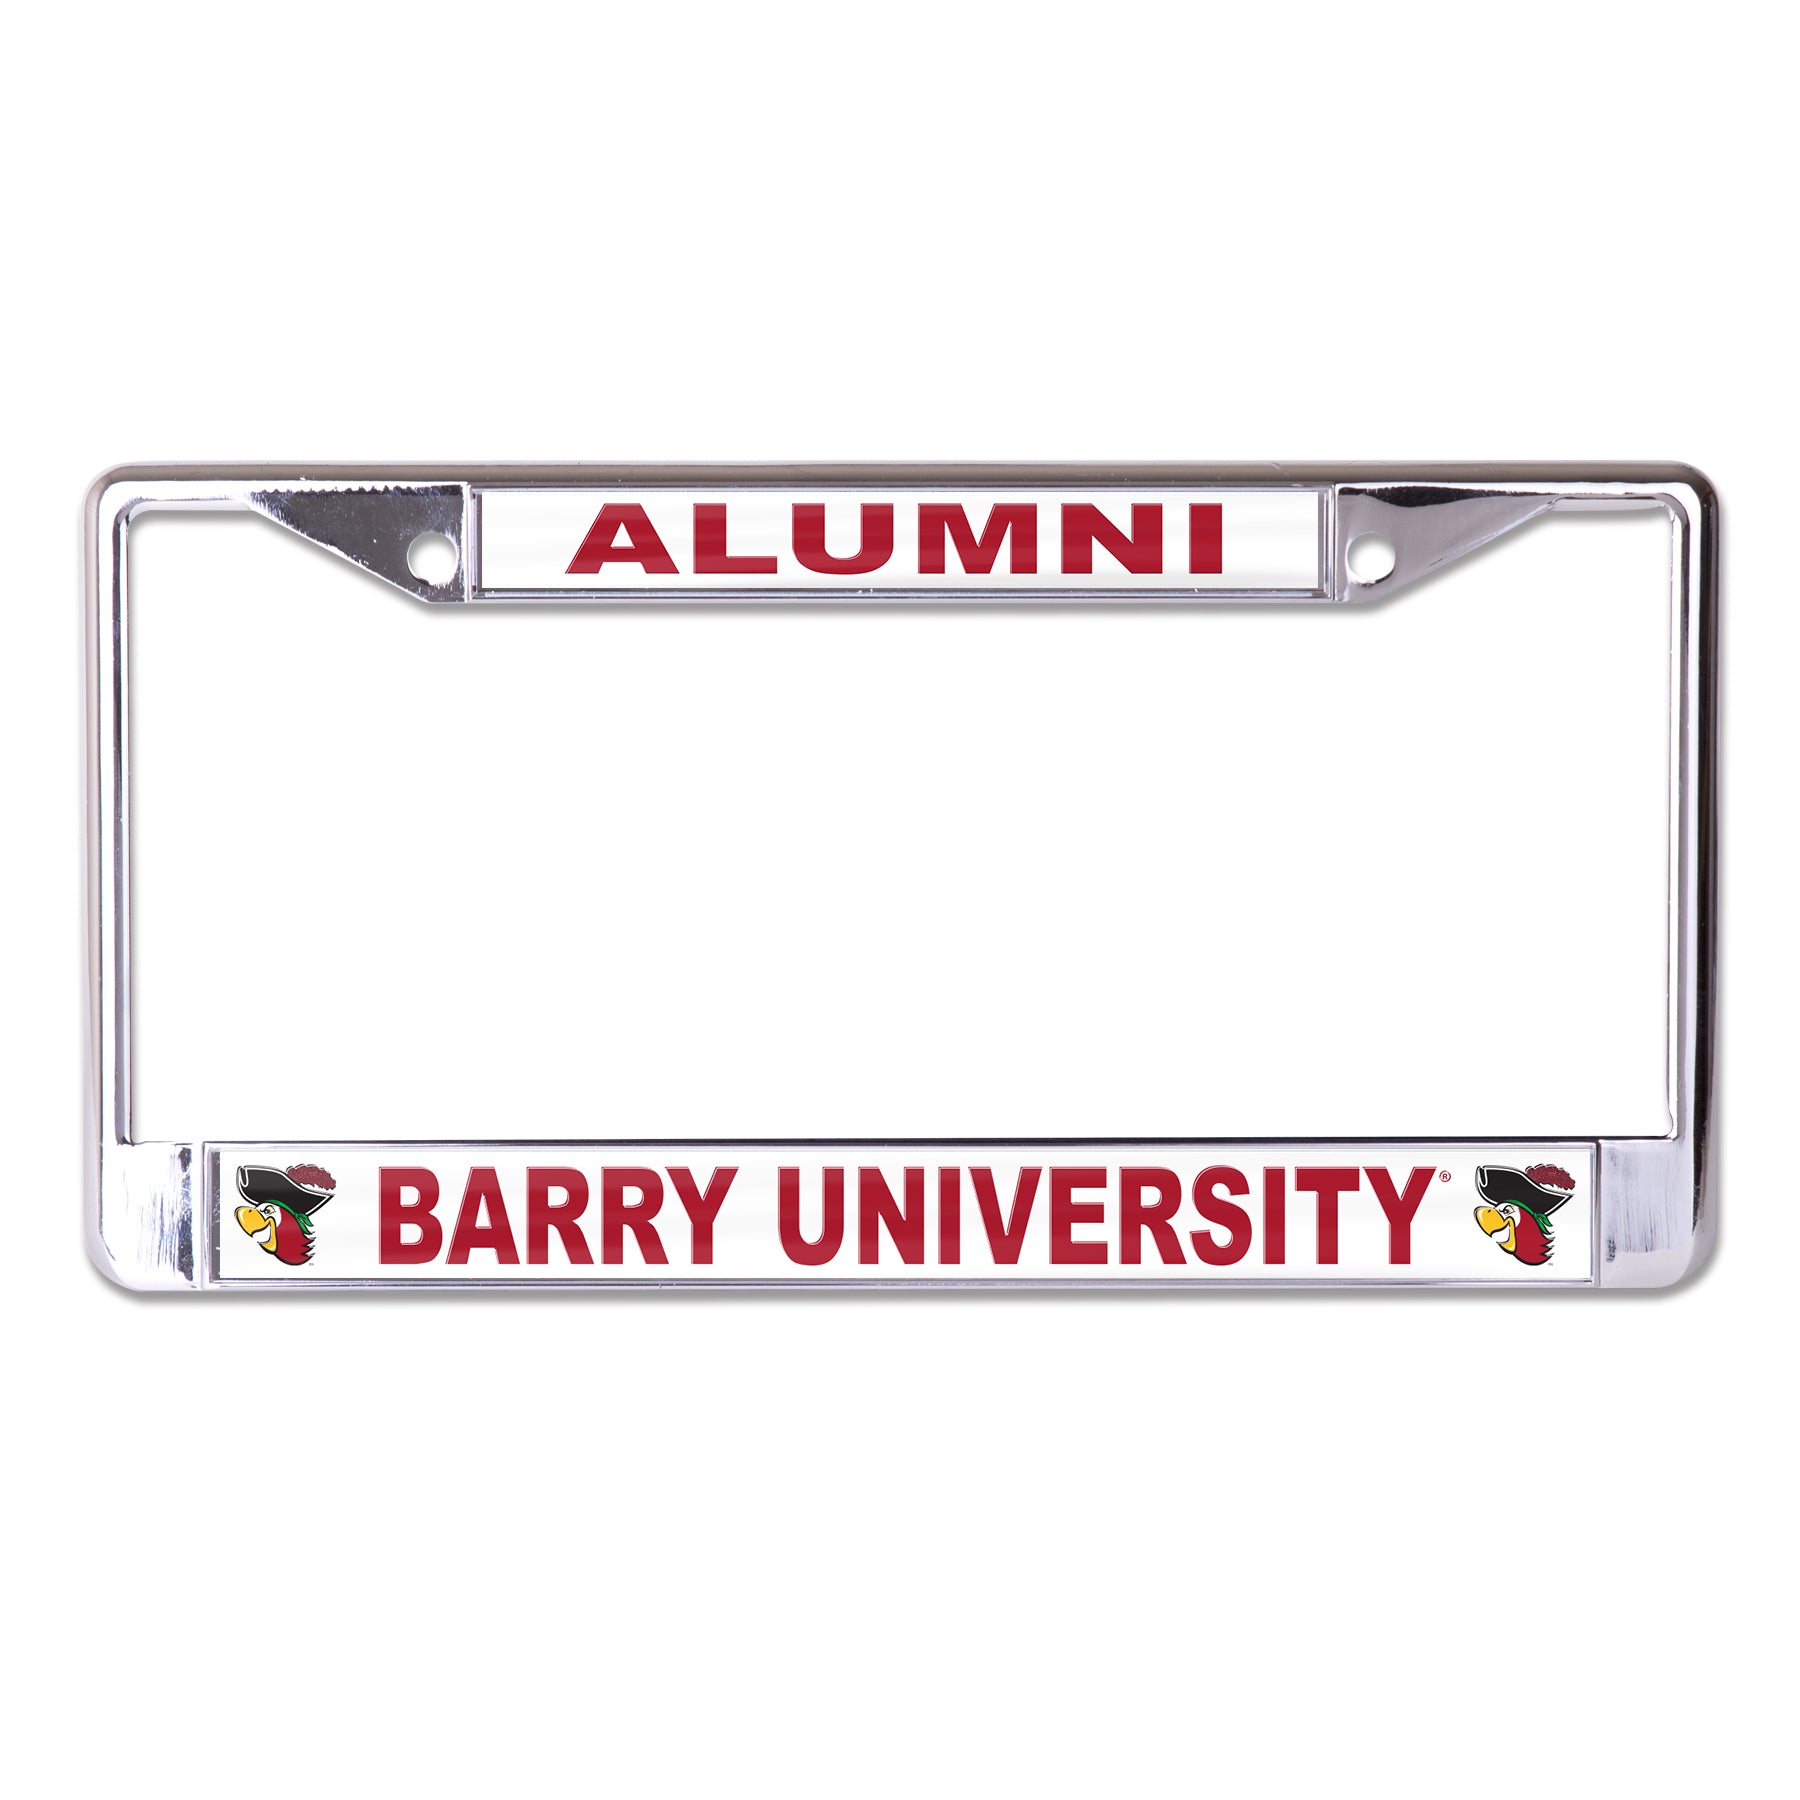 Barry University Alumni Chrome License Plate Frame